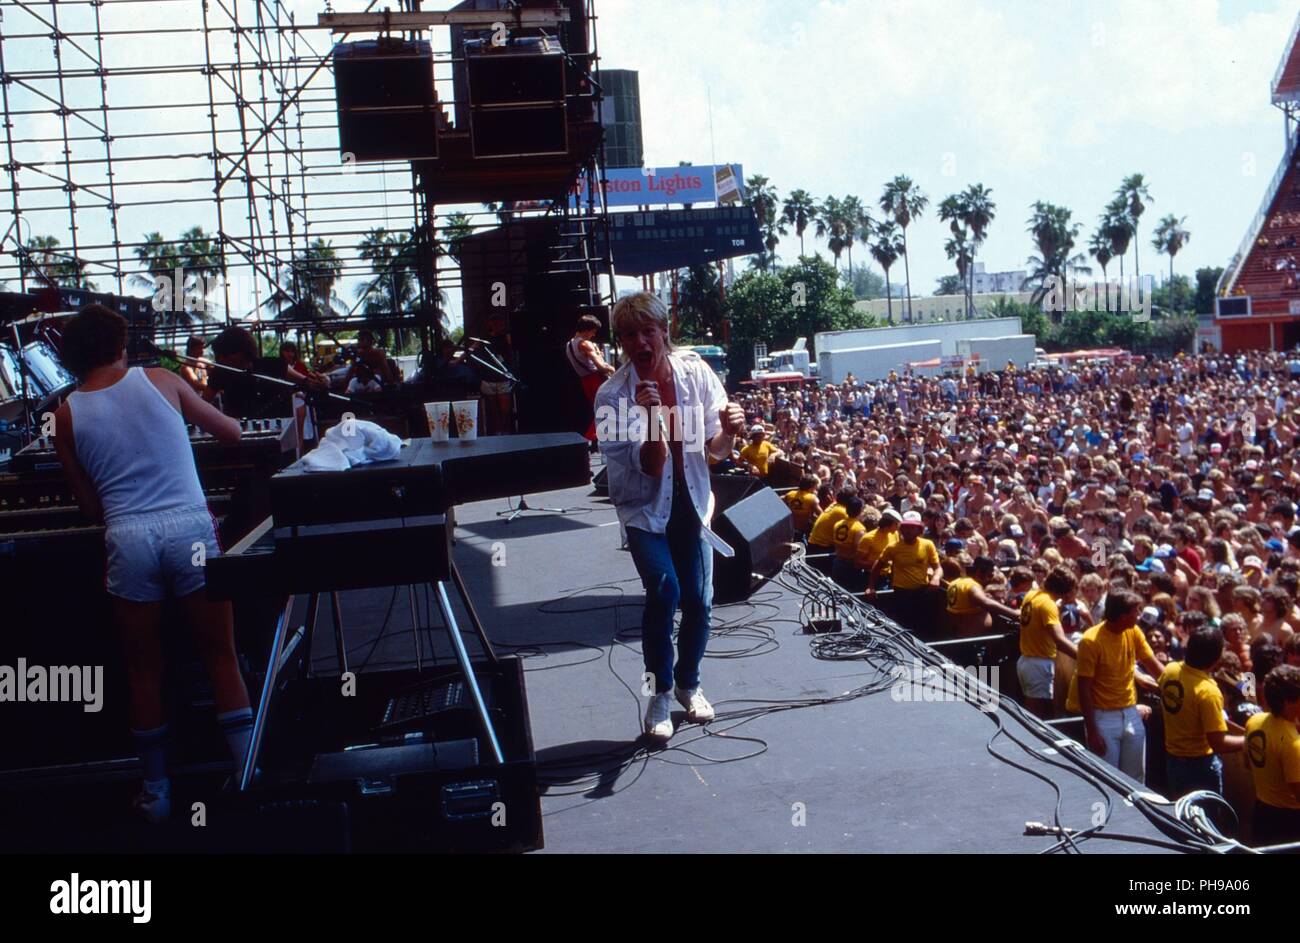 Singer Bryan Adams on stage in Florida in November 1982.